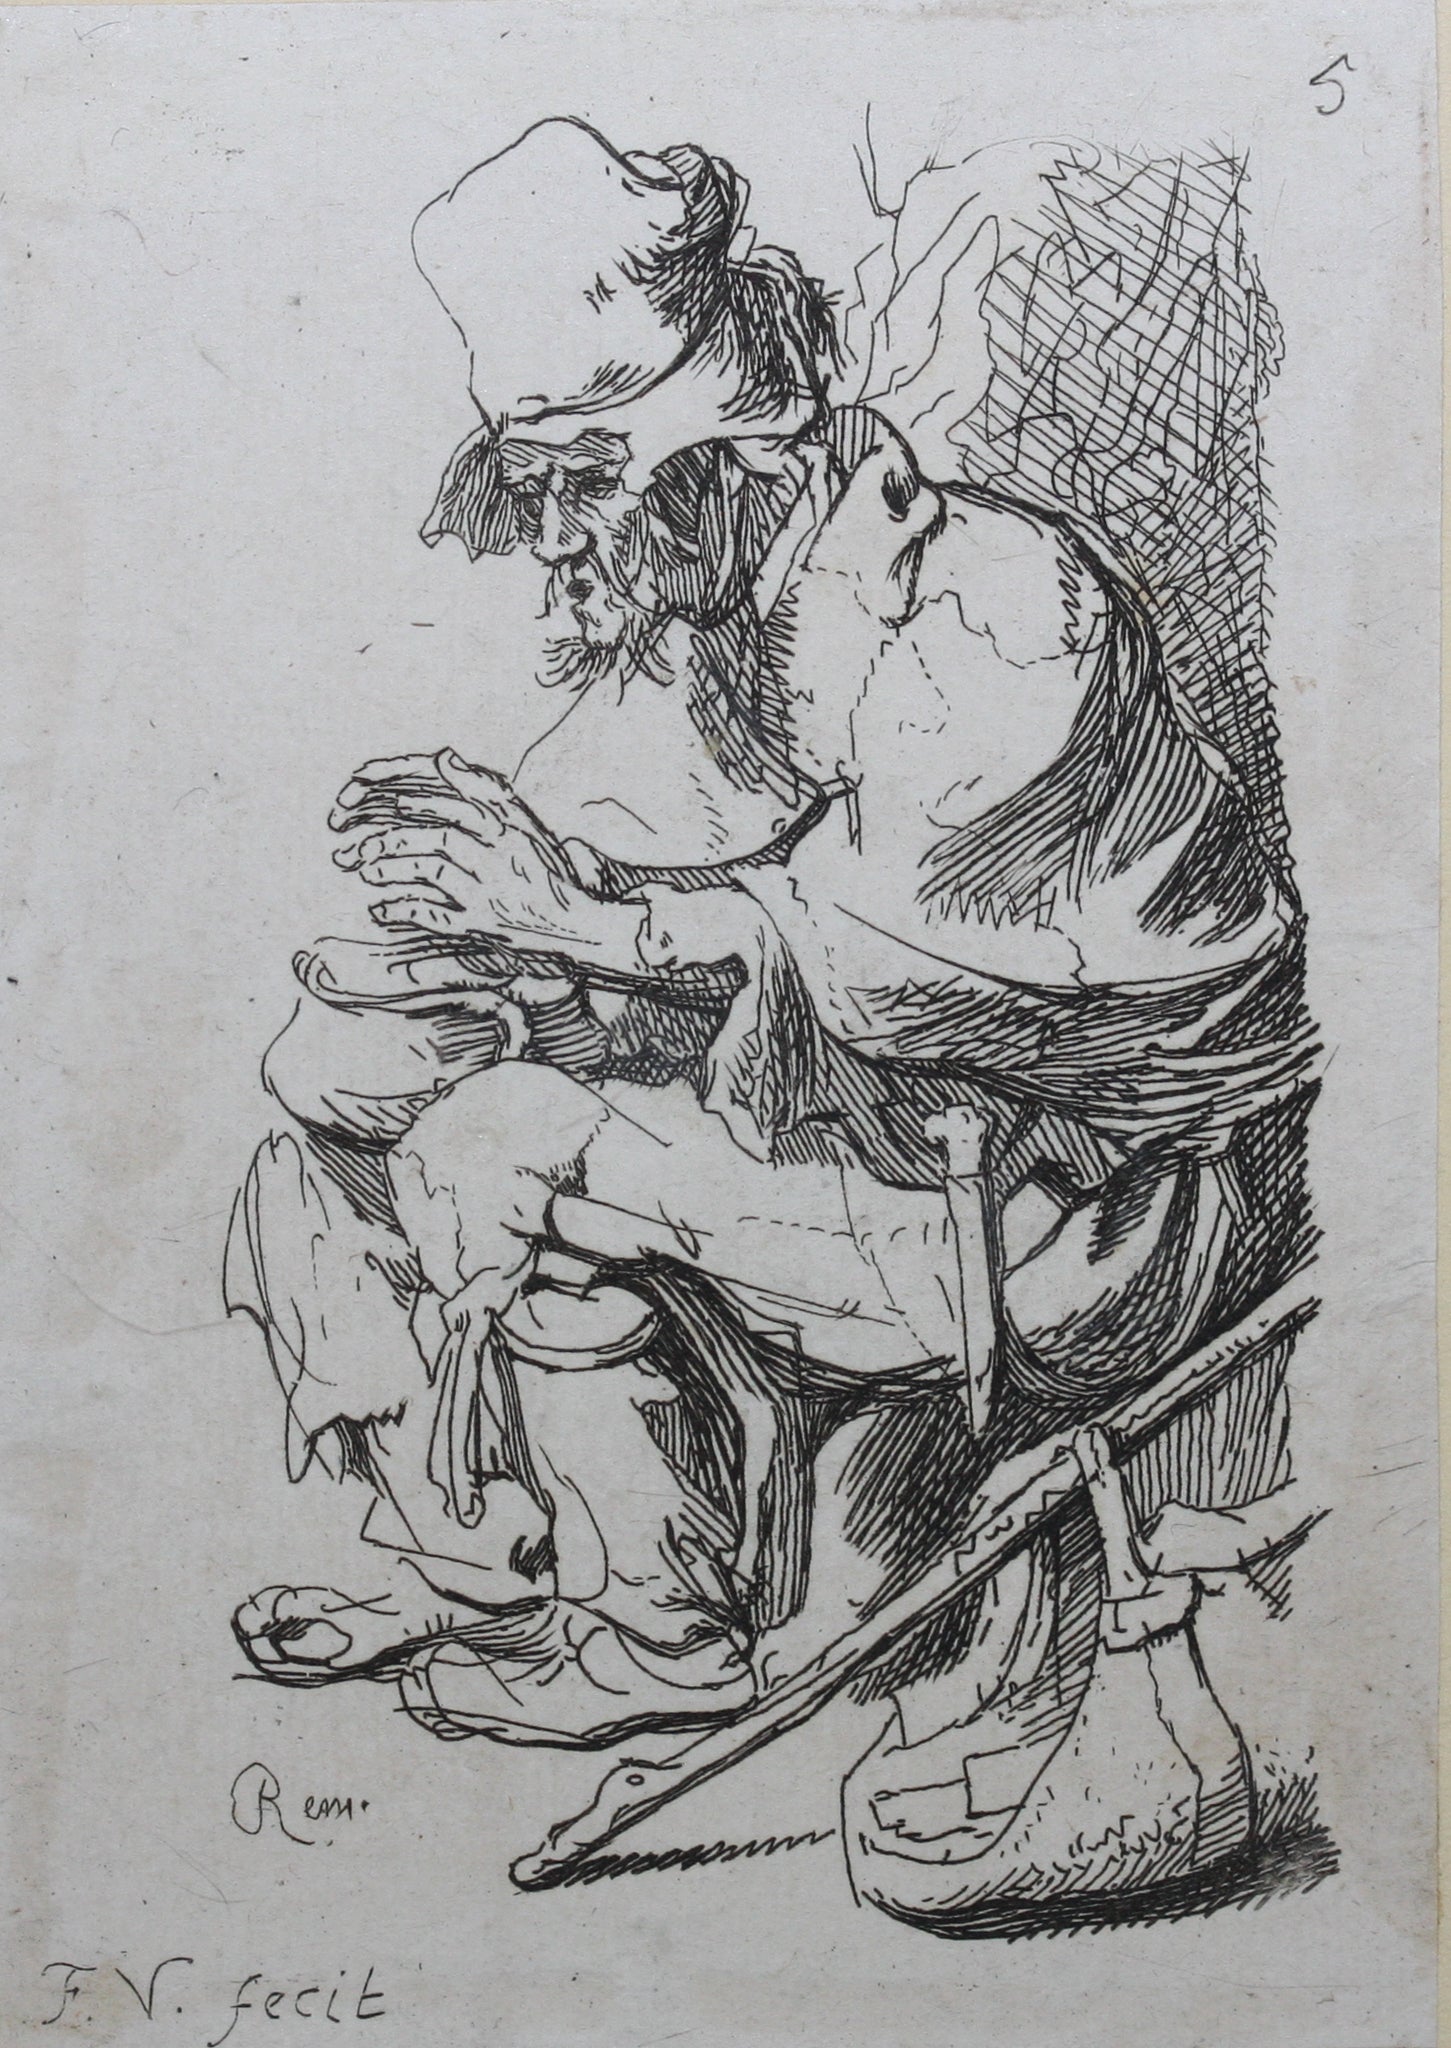 Rembrandt Harmensz van Rijn, after. Five etchings by Vivares 